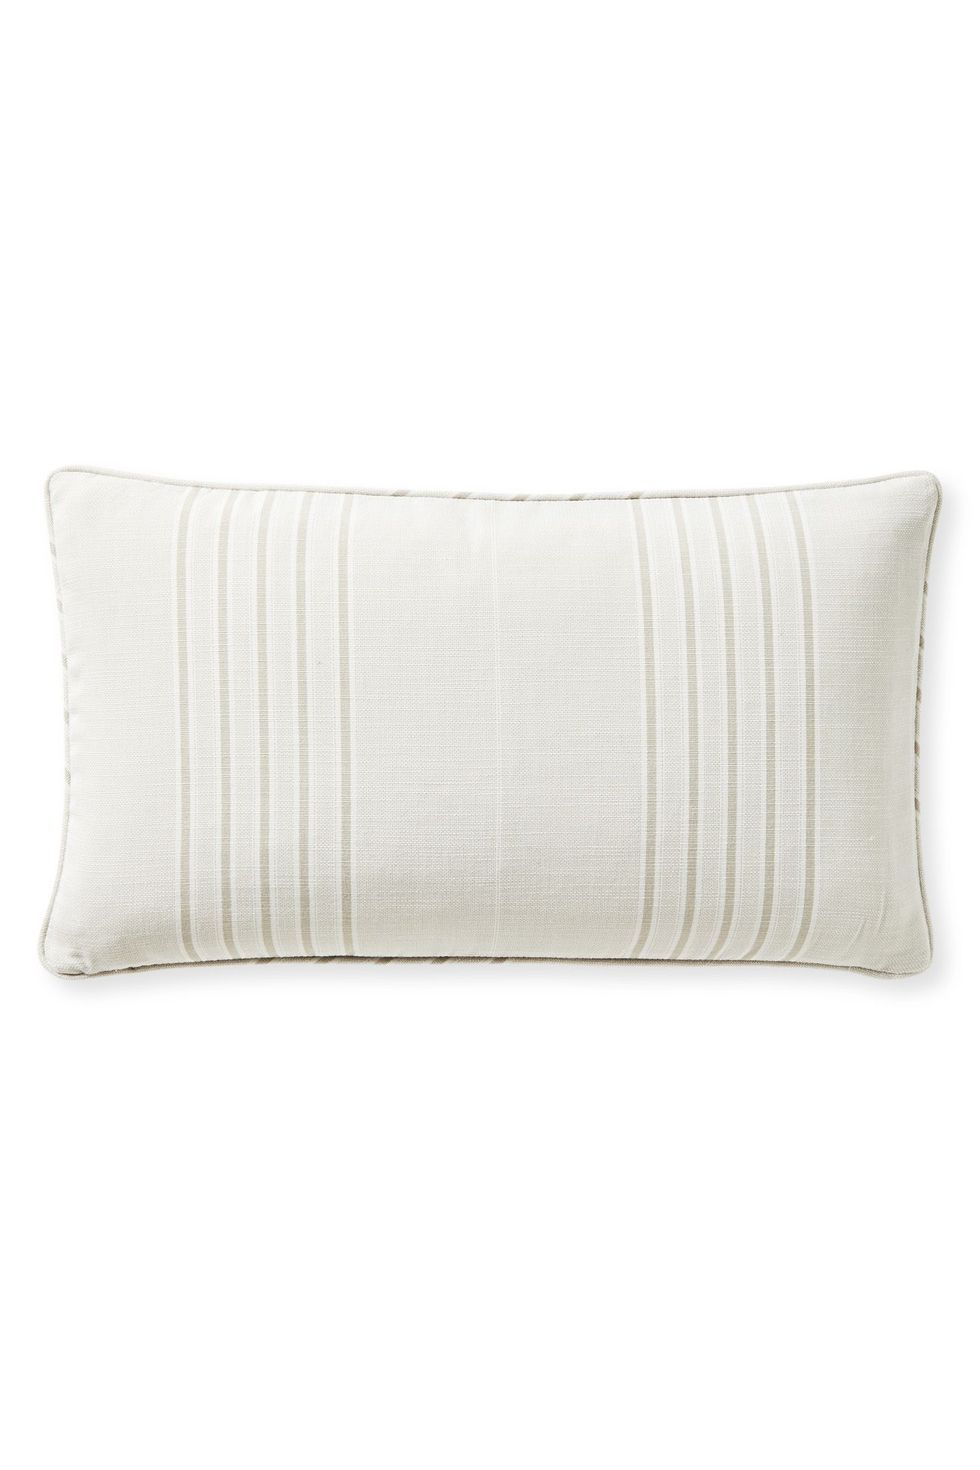 Perennials Rockland® Pillow Cover